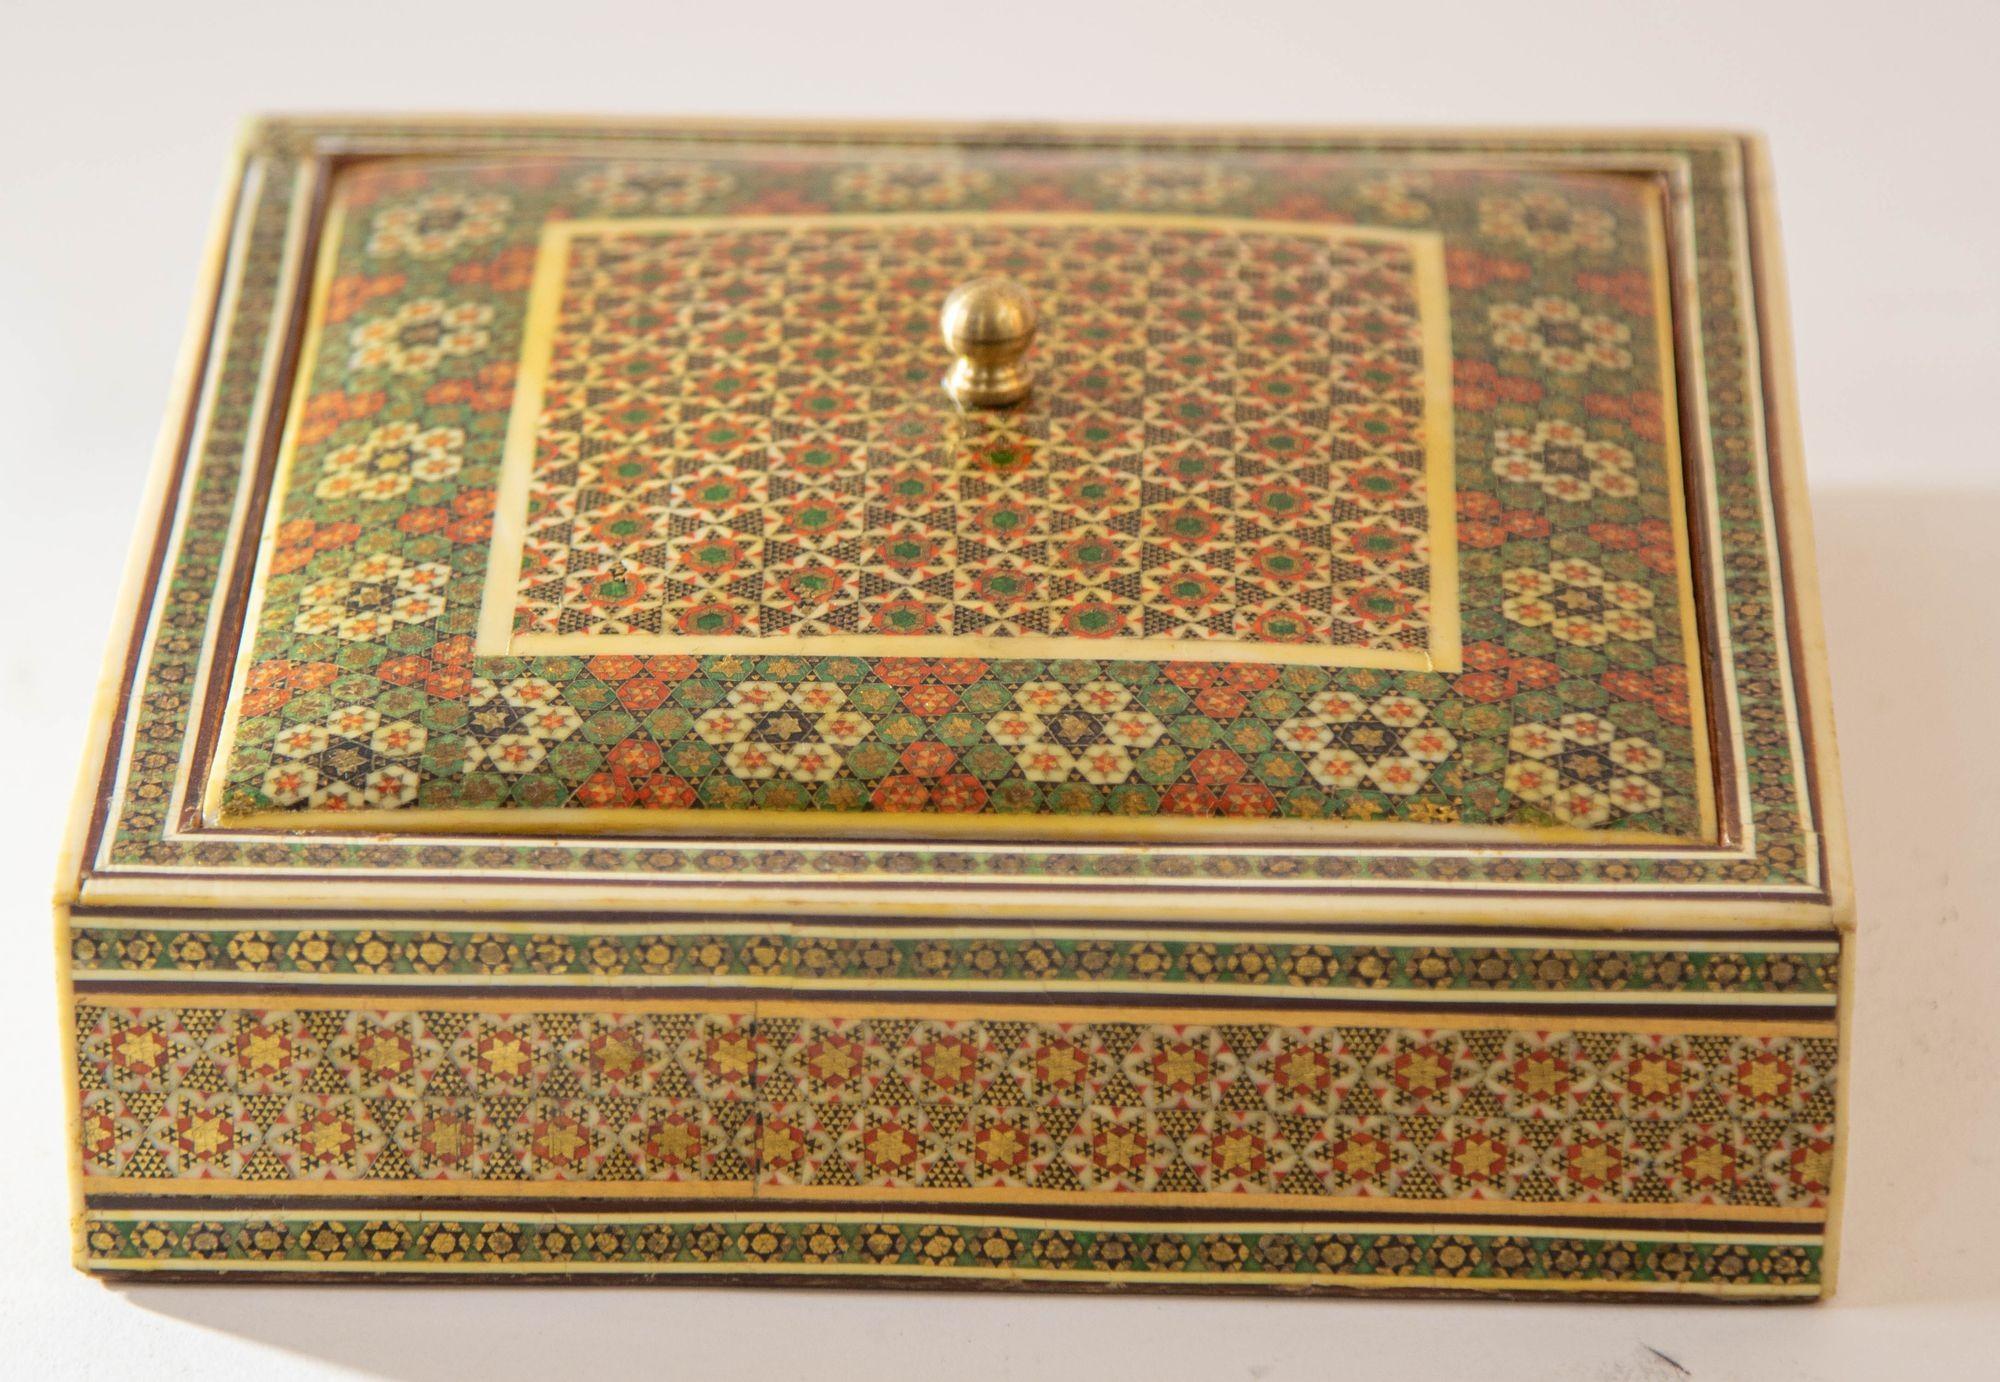 1950s Anglo Indian Micro Sadeli Mosaic Inlaid Jewelry Box.
DIMENSIONS: 7ʺW × 7ʺD × 2.5ʺH.
Indo Persian Moorish style micro mosaic inlaid jewelry box with lid.
Intricate inlaid Anglo Indian box with floral and geometric Islamic Moorish Sadeli design